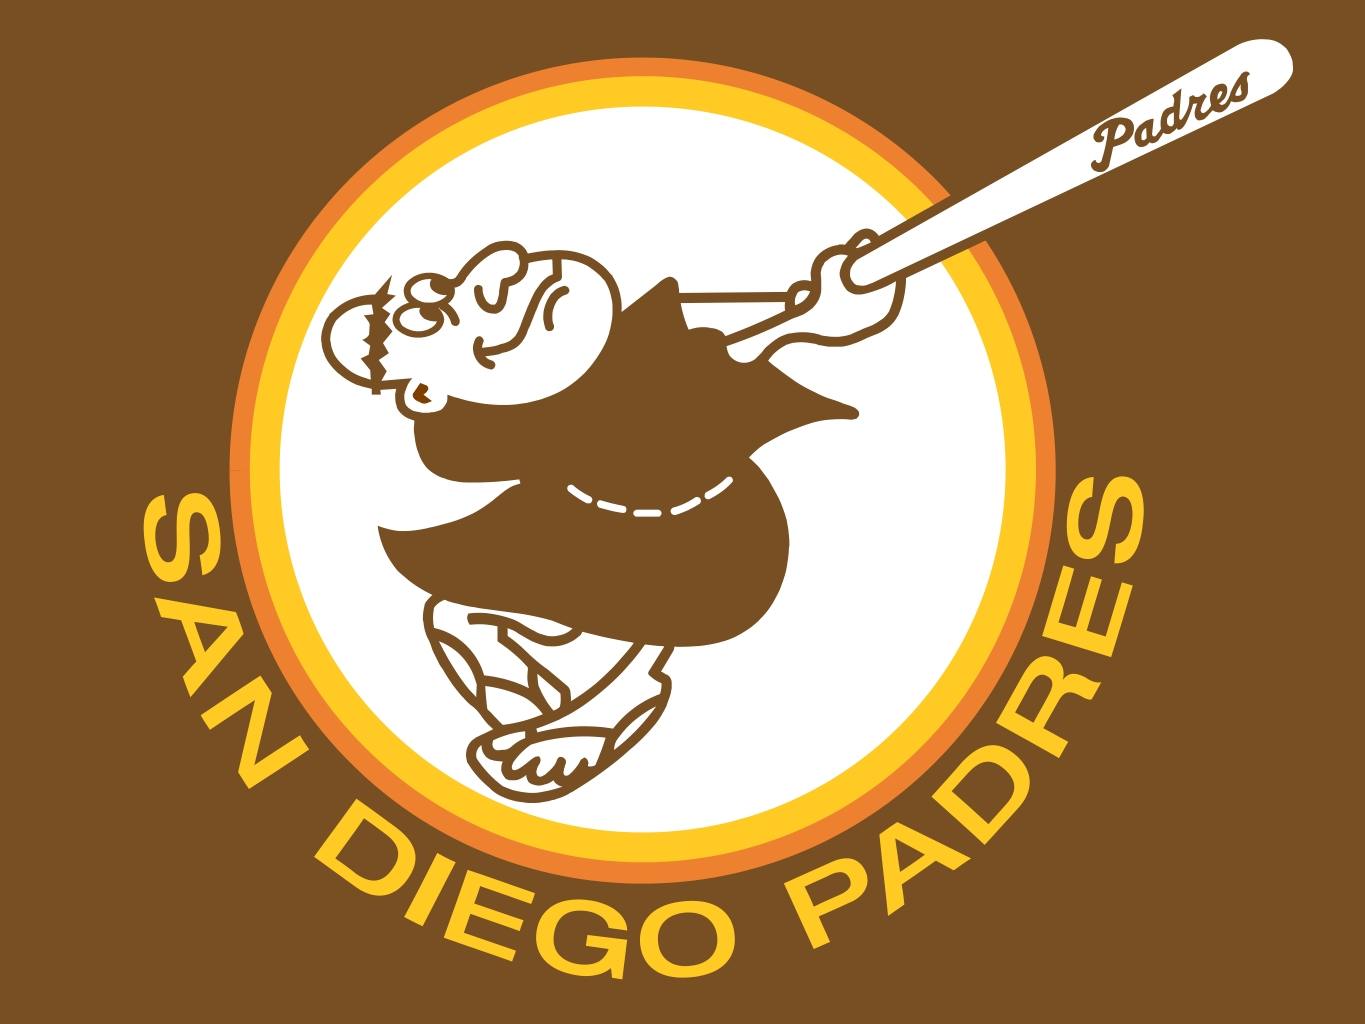 Paders Logo - Bring Back the Swinging Friar Logo. East Village Times